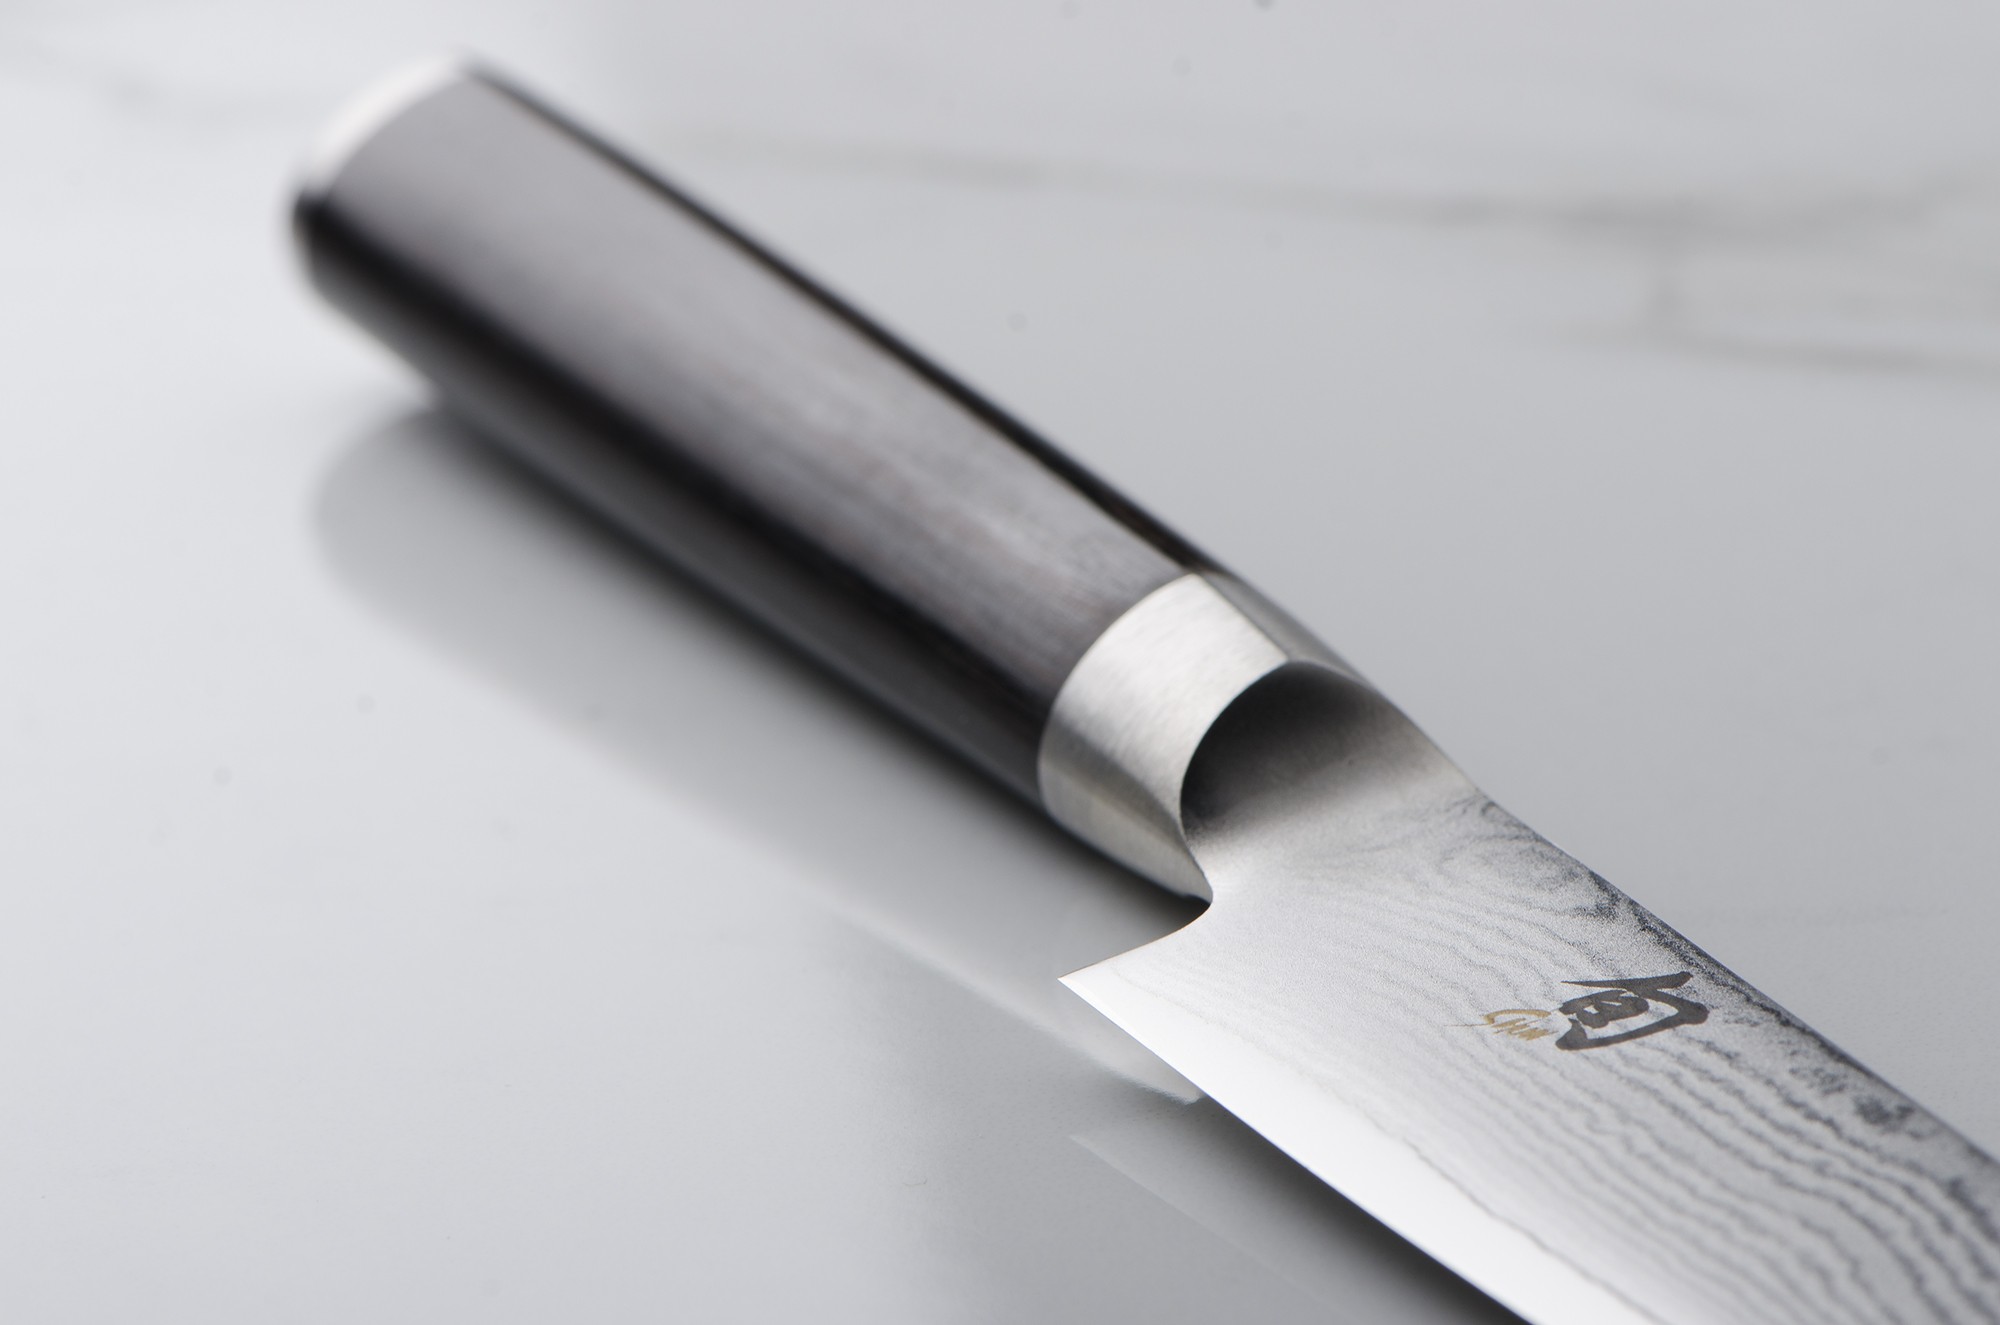 https://www.colichef.fr/4331/kai-shun-dm-0701-universal-damask-knife-15-cm-case-protects-magnetic-blade-offered.jpg